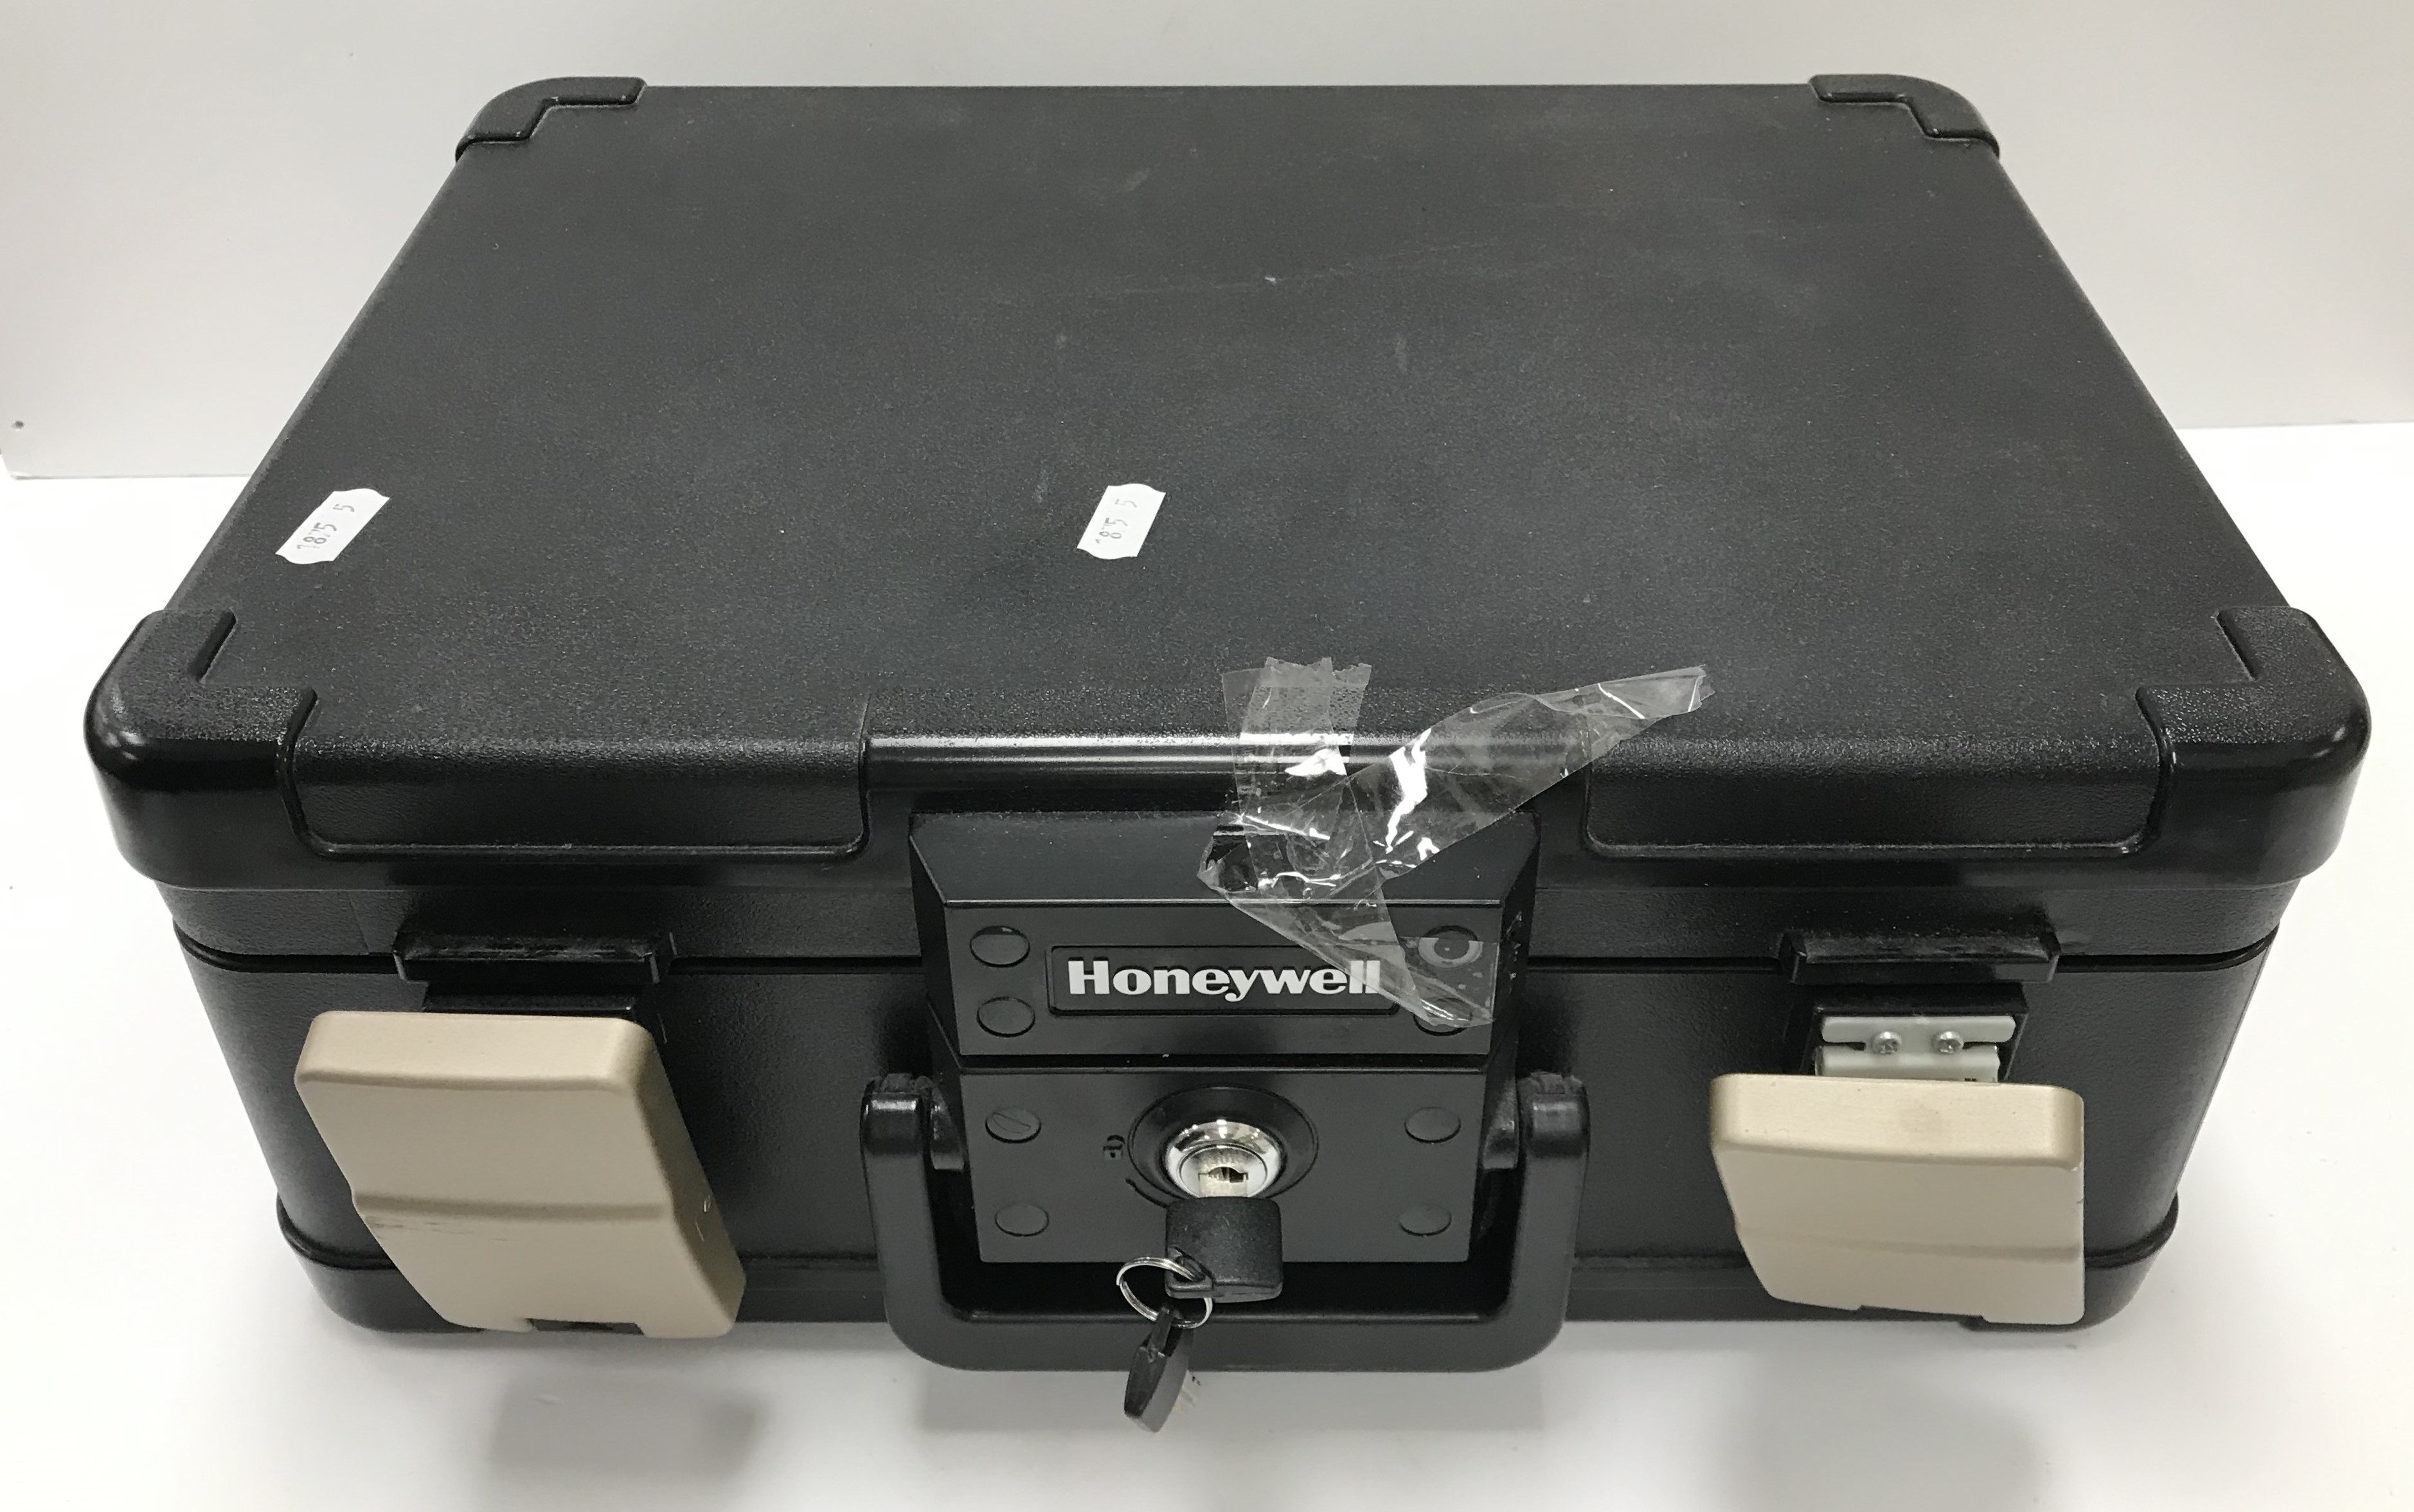 A Honeywell heavy duty lock box 40 cm x 31 cm x 17 cm